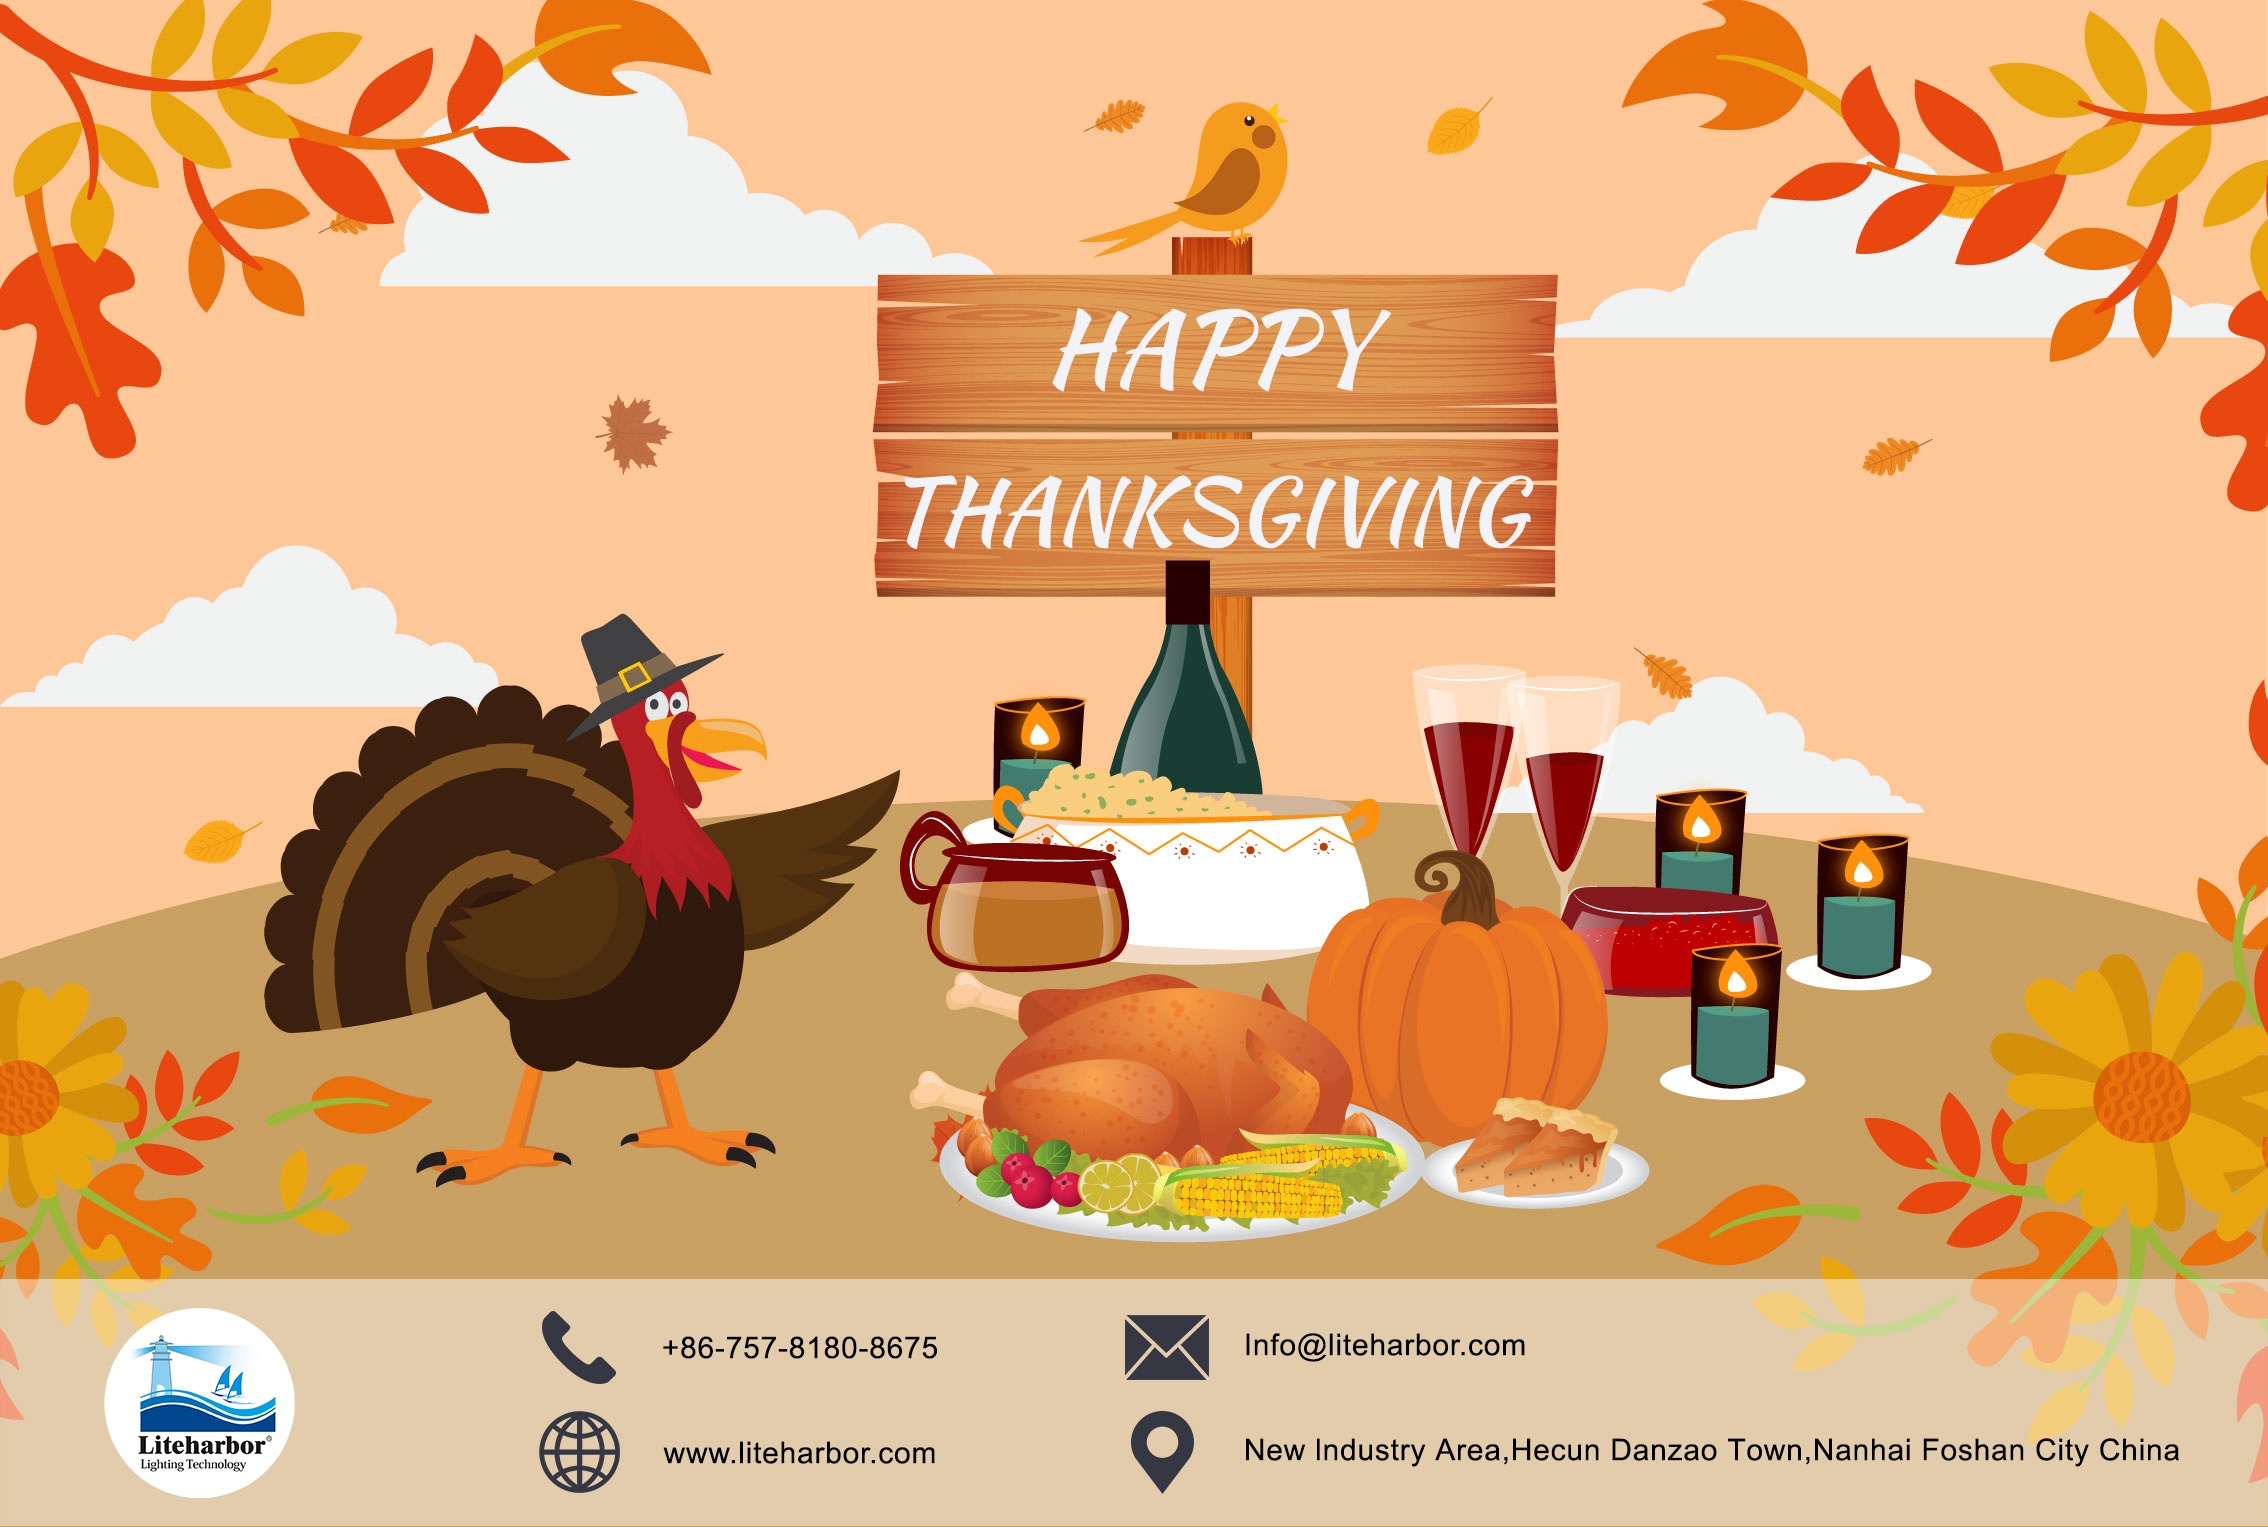 Liteharbor Wish You a Wonderful Thanksgiving Day